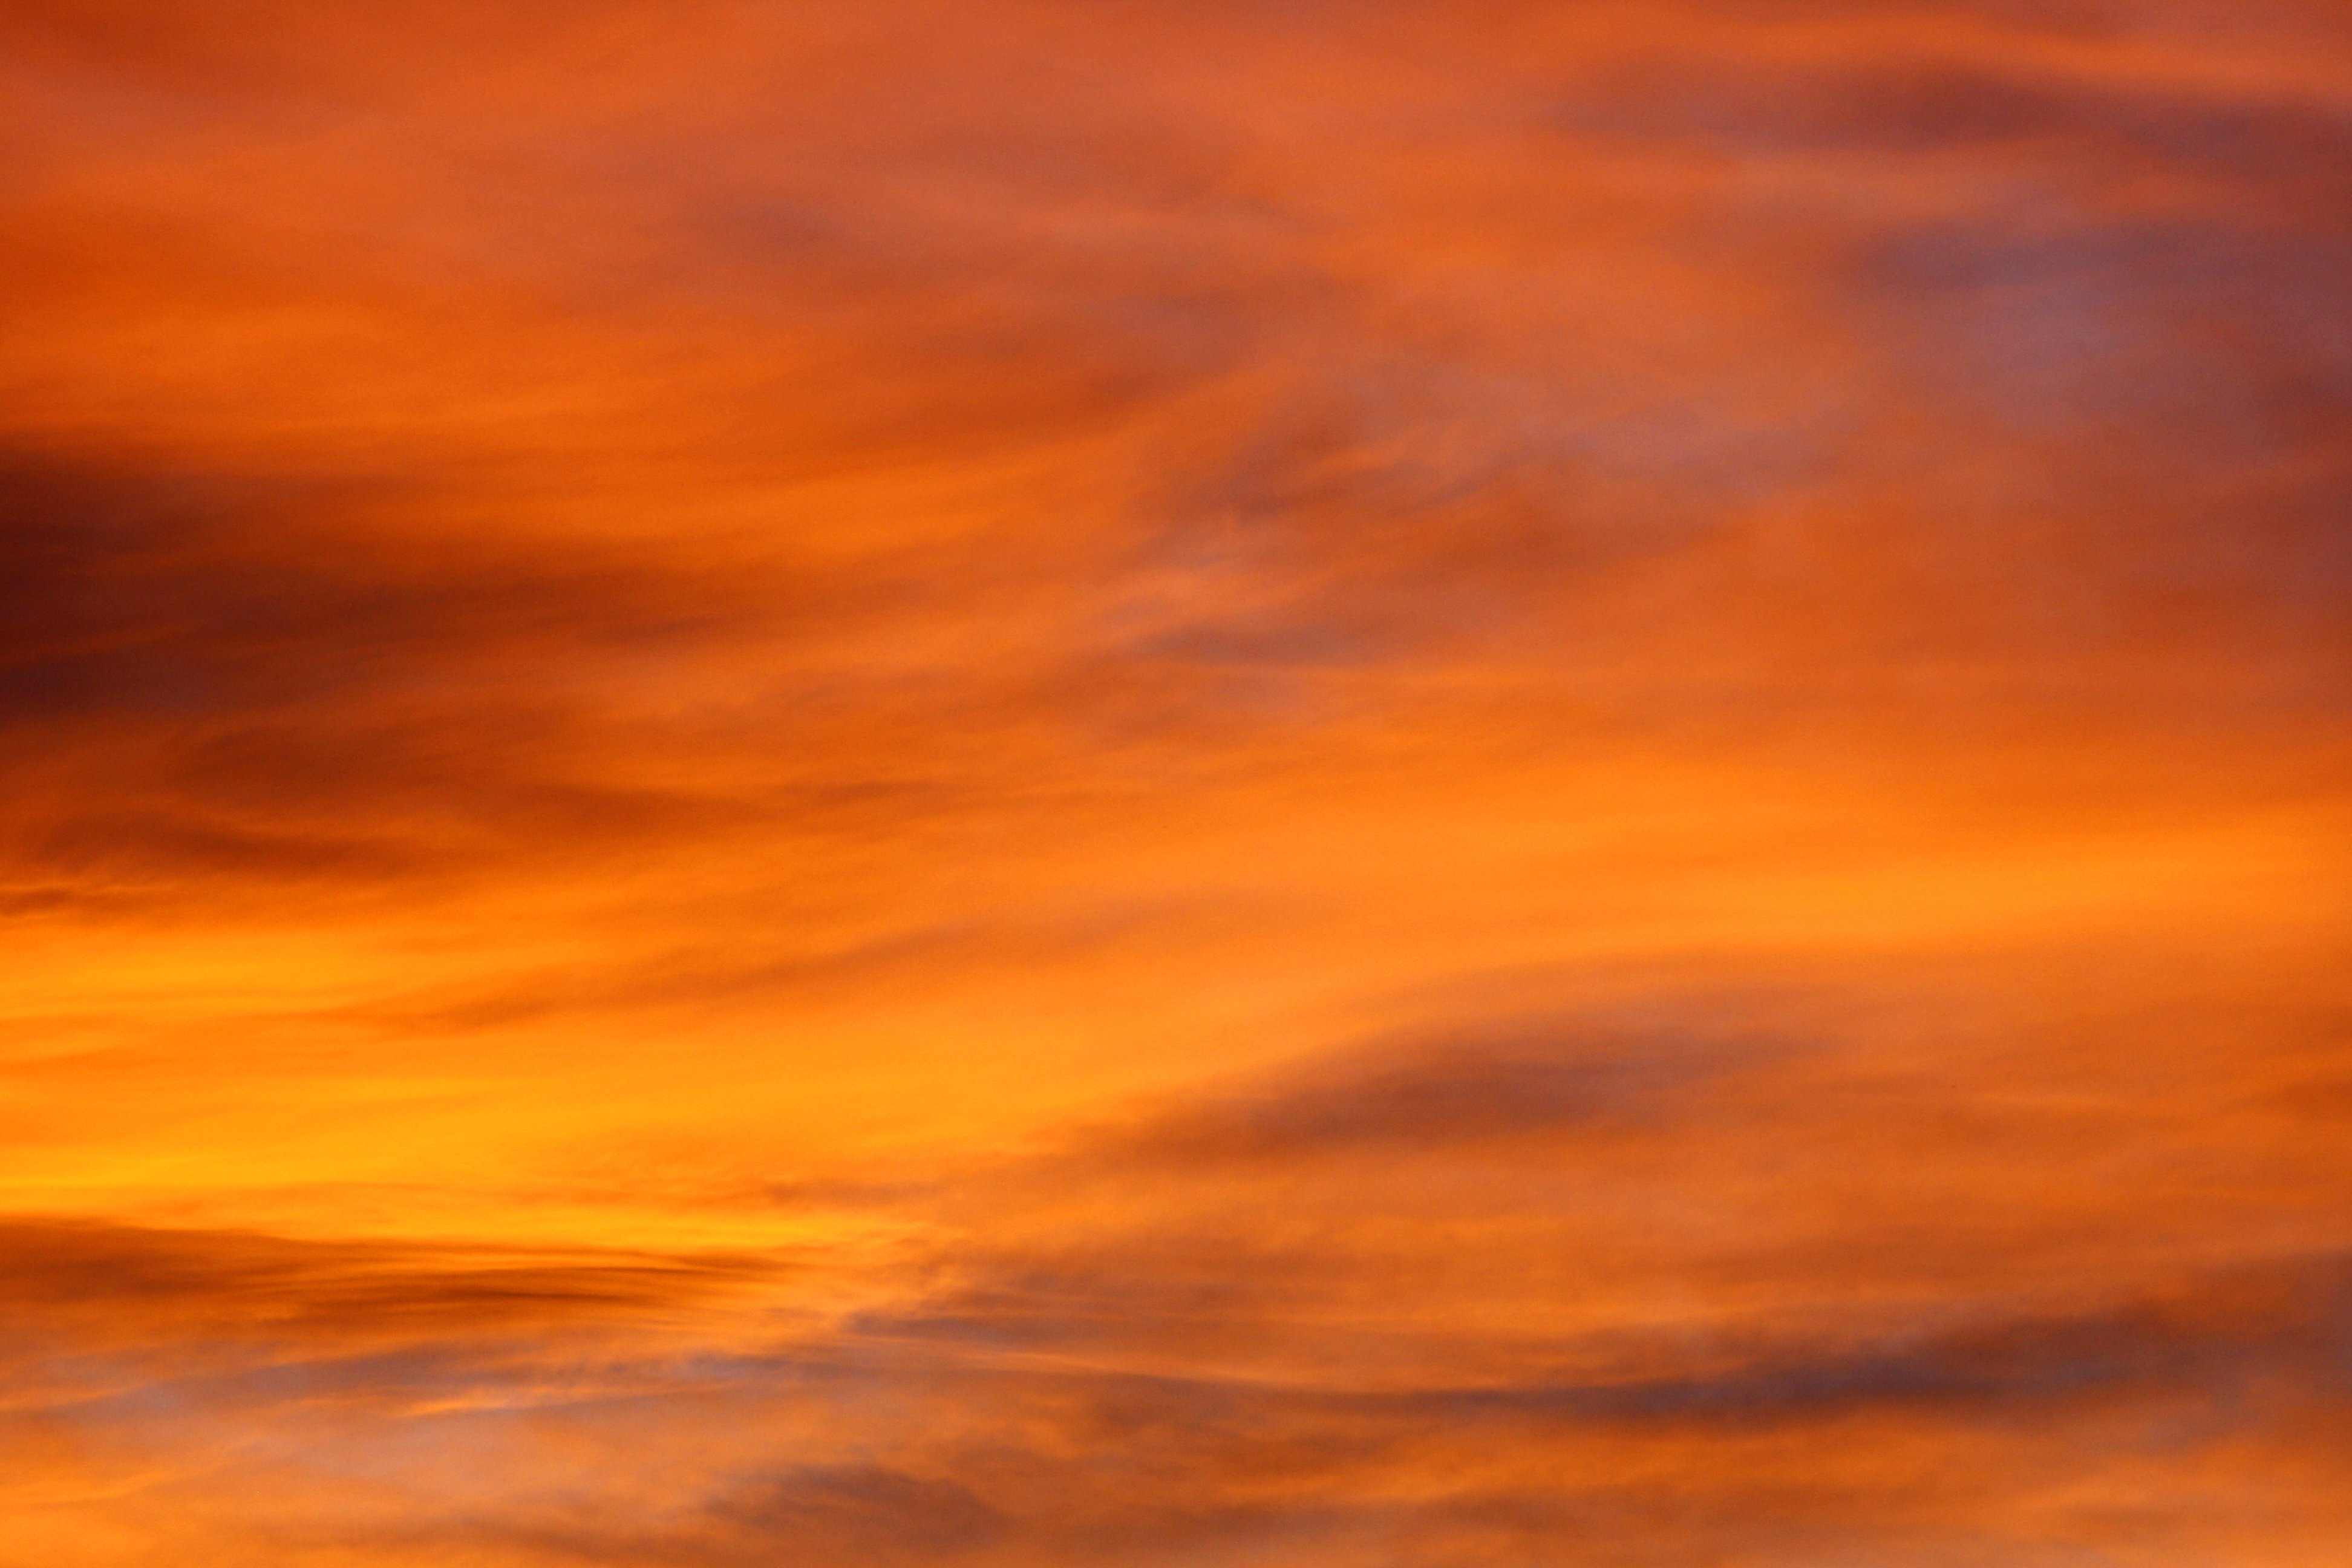 Brilliant Orange Sunset Clouds Picture | Free Photograph | Photos ...